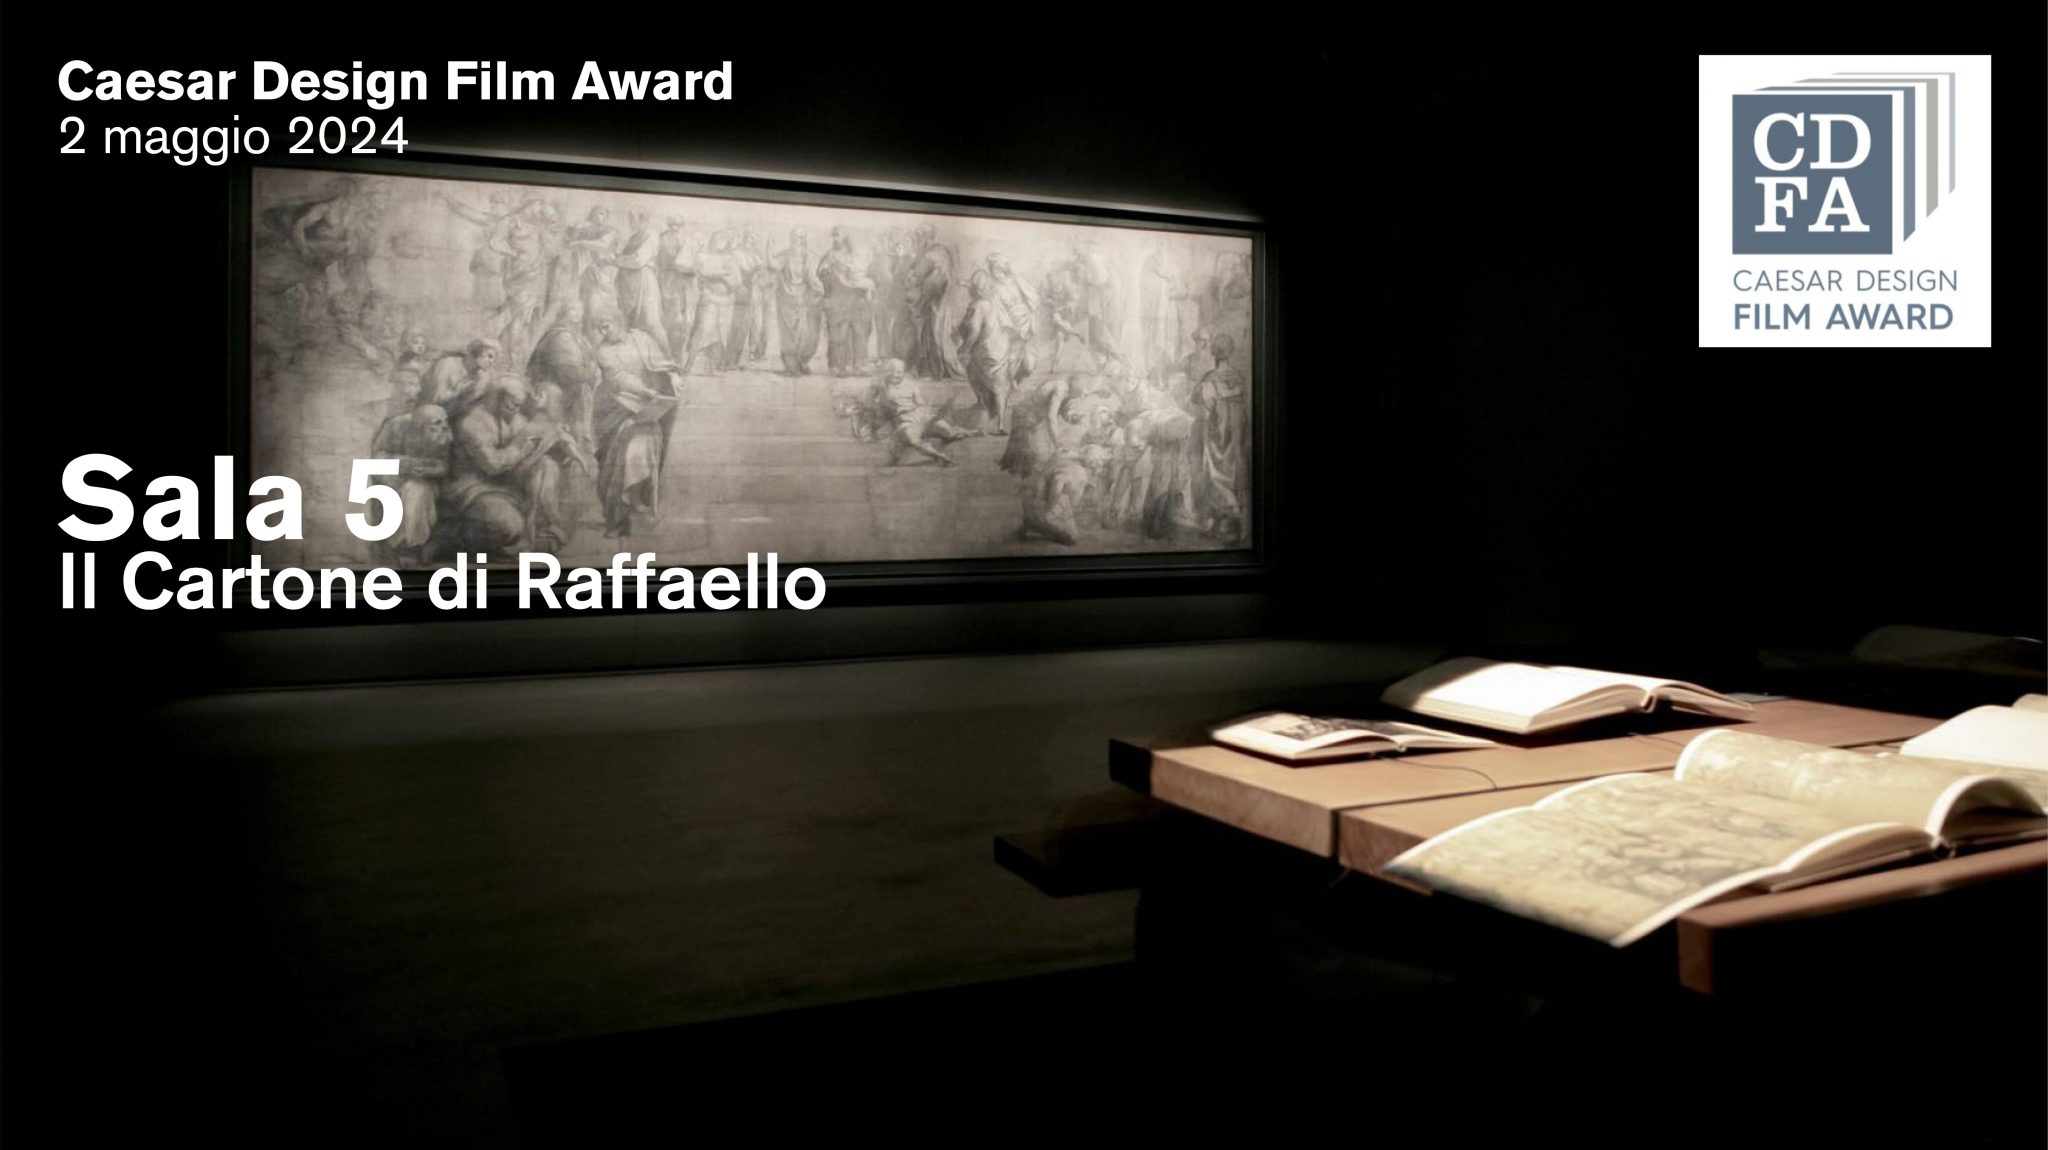 Caesar Design Film Award with Sala 5 Raphael's Cartoon Room